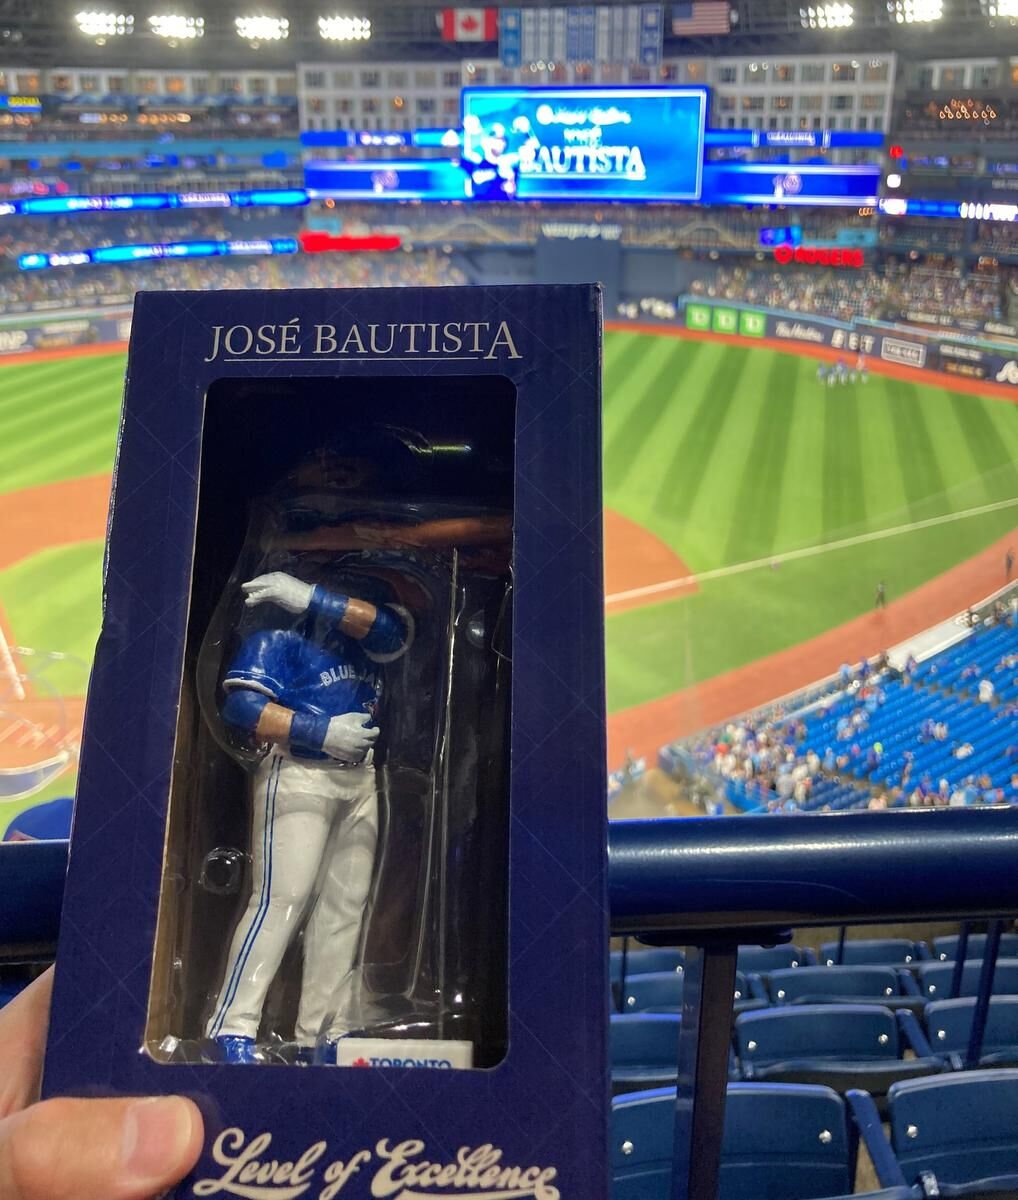 Toronto Blue Jays: Being thankful for the Jose Bautista bat flip